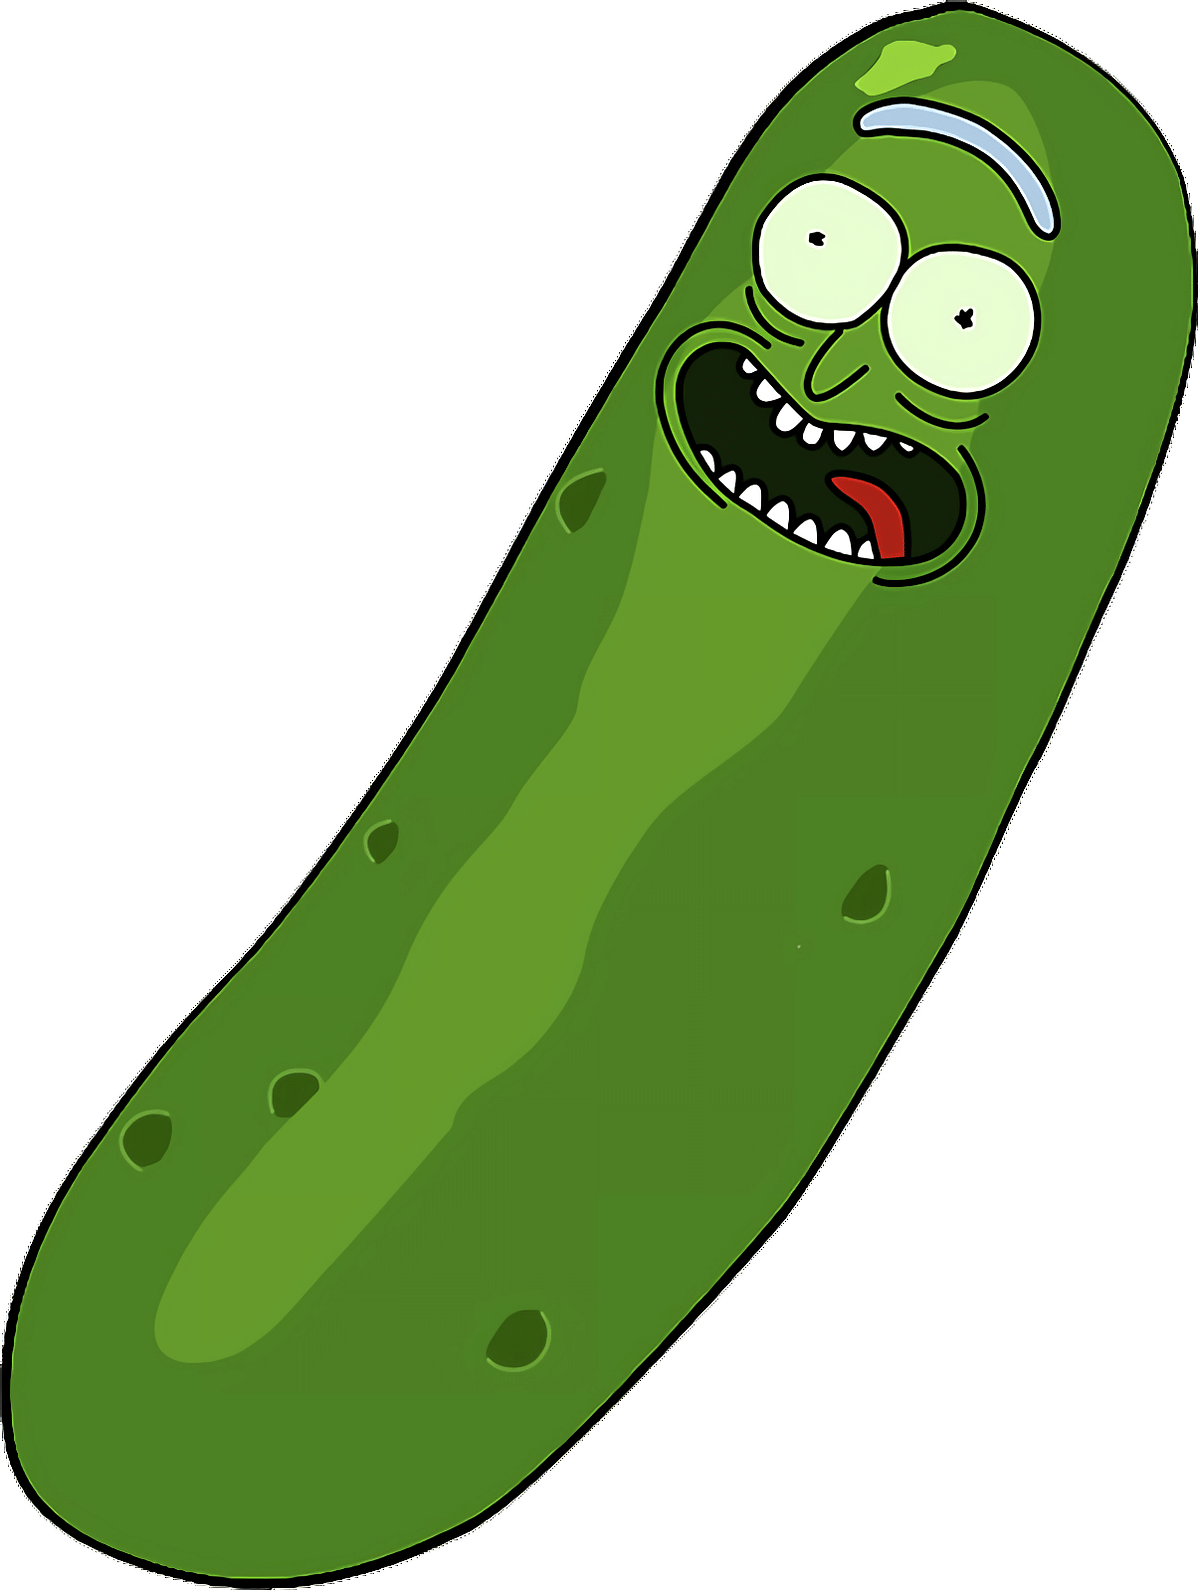 Pickle Rick costume